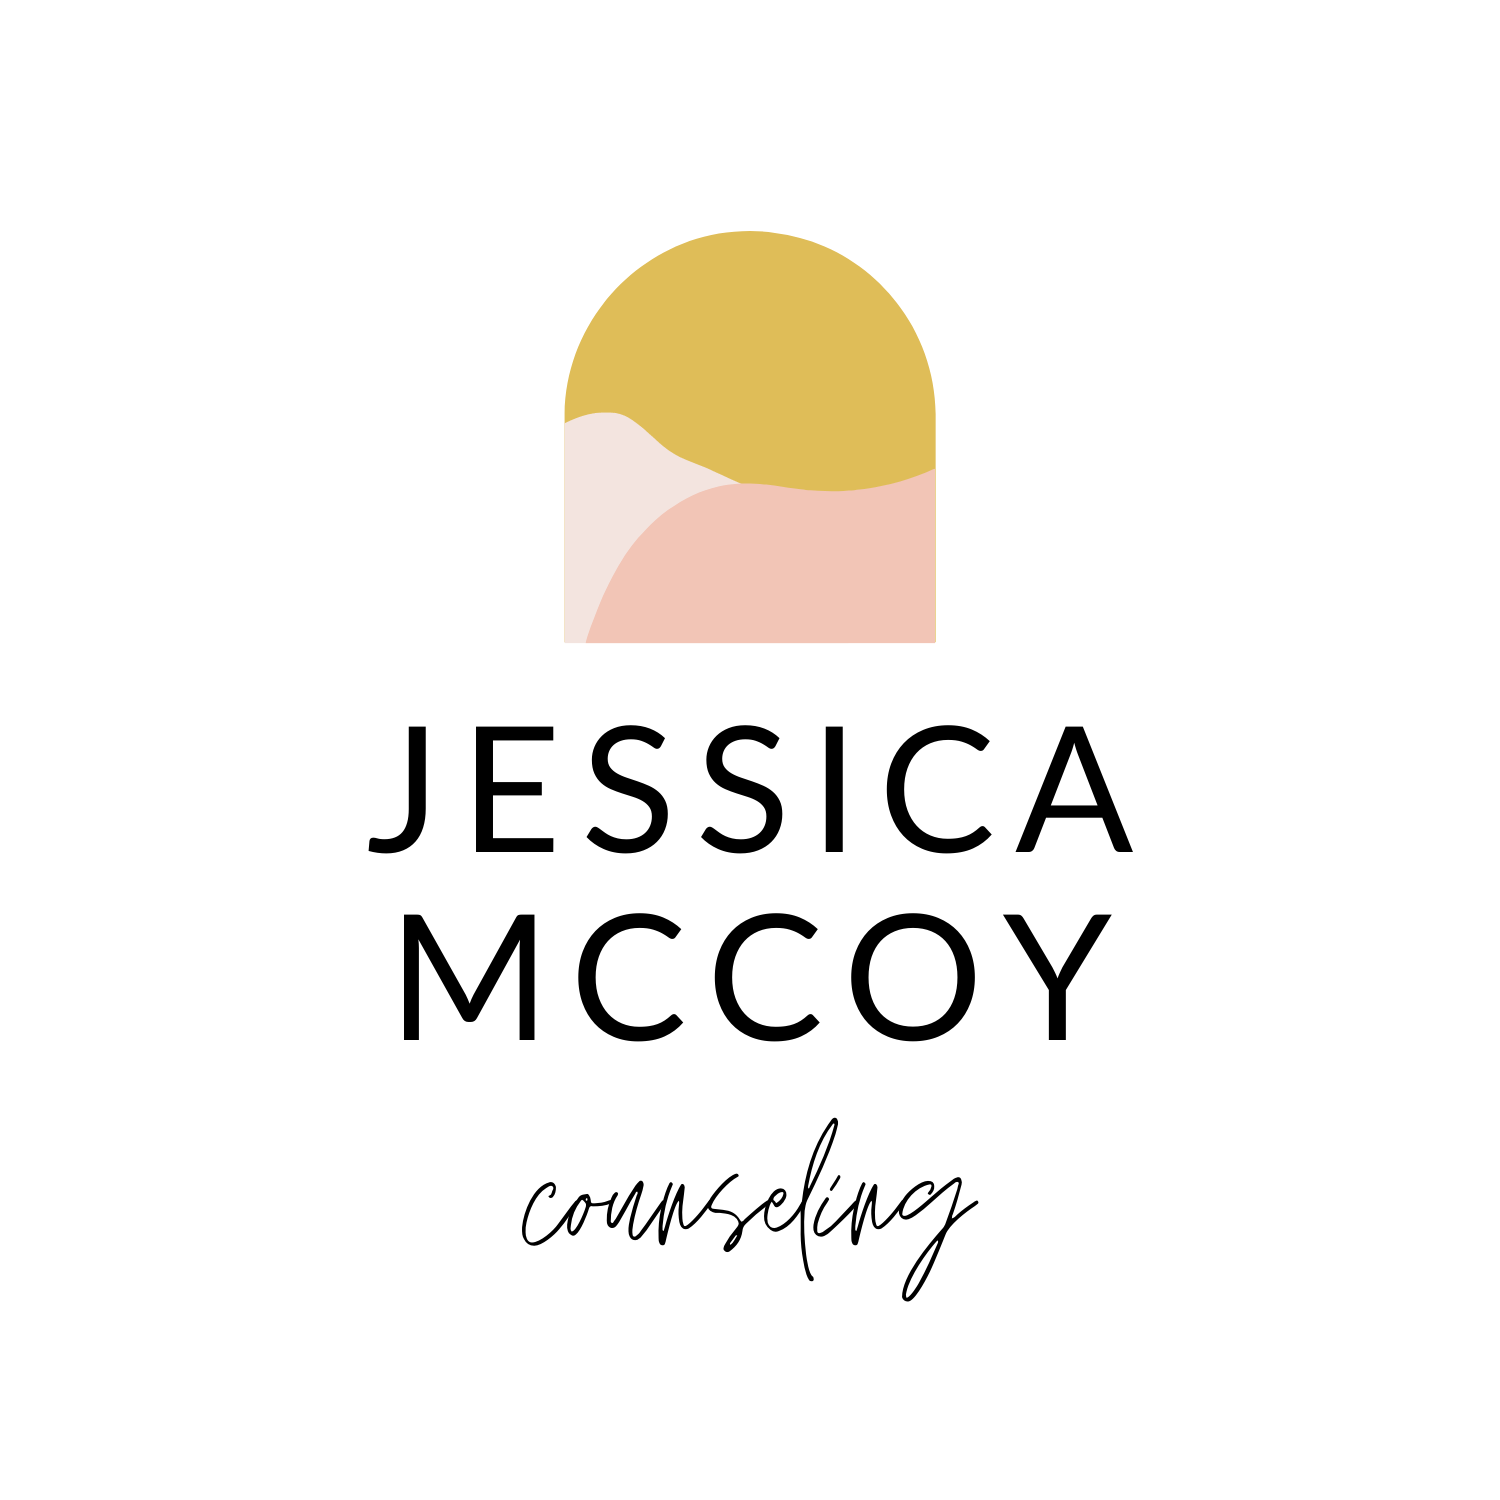 Jessica McCoy Counseling